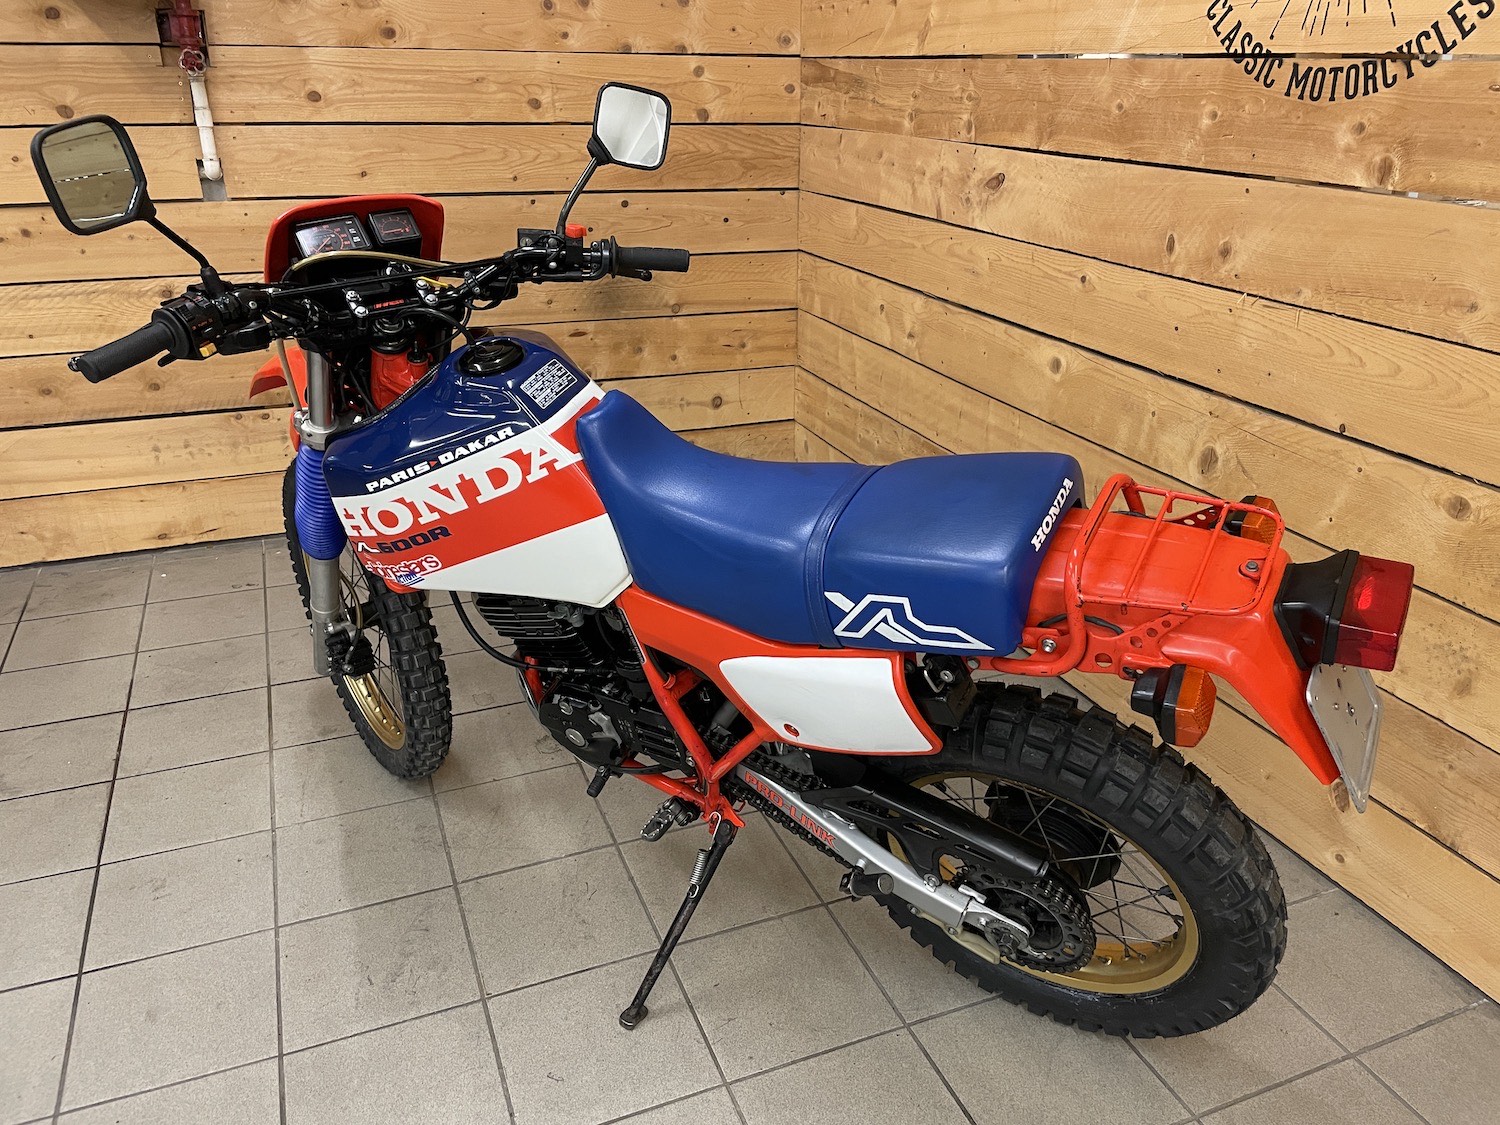 Honda_XL600R_ParisDakar_84_cezanne_classic_motorcycle_10-117.jpg